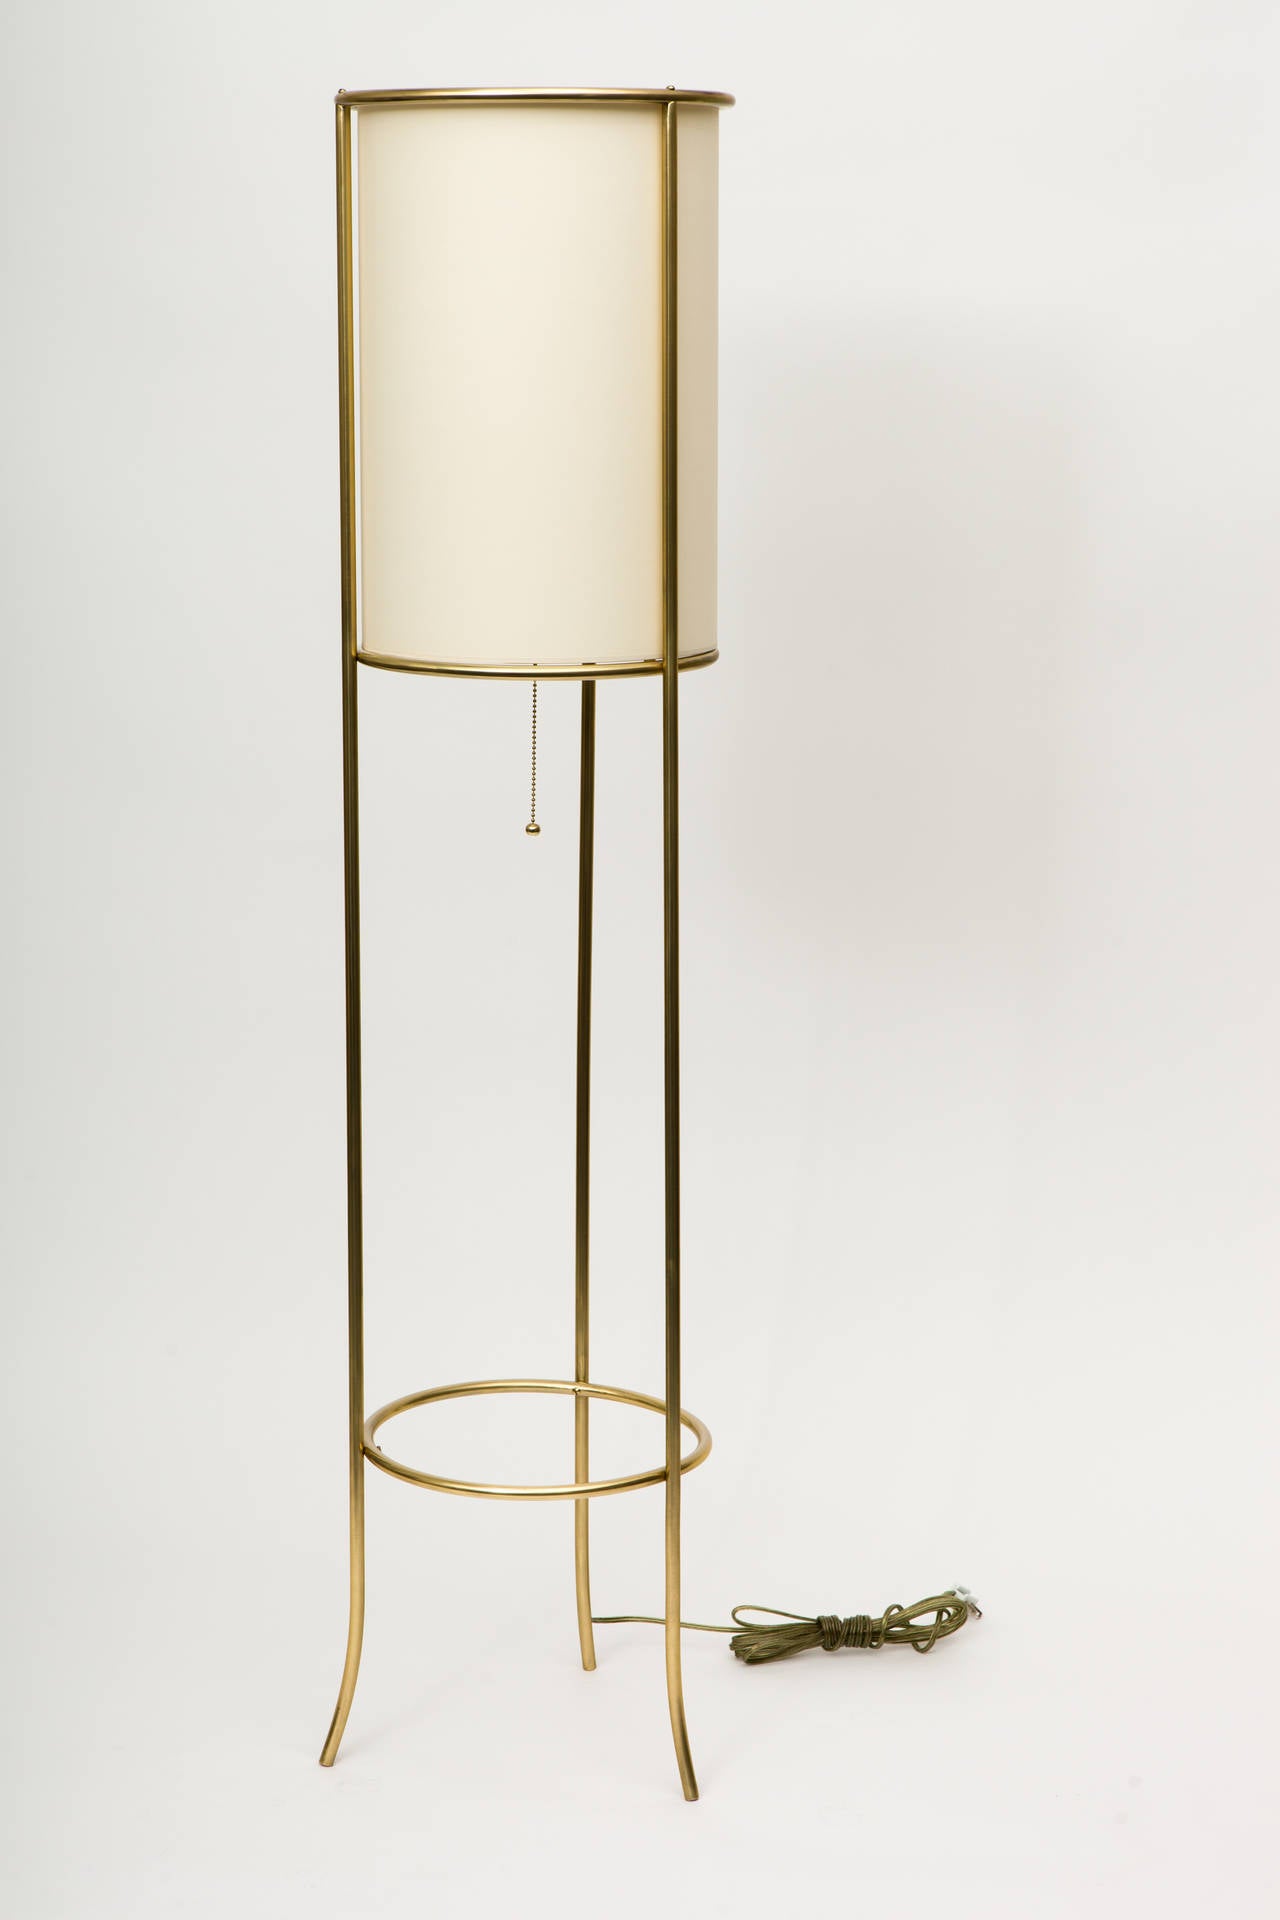 Contemporary Pair of Tripod Brass Floor Lamps in the Manner of T.H. Robsjohn-Gibbings